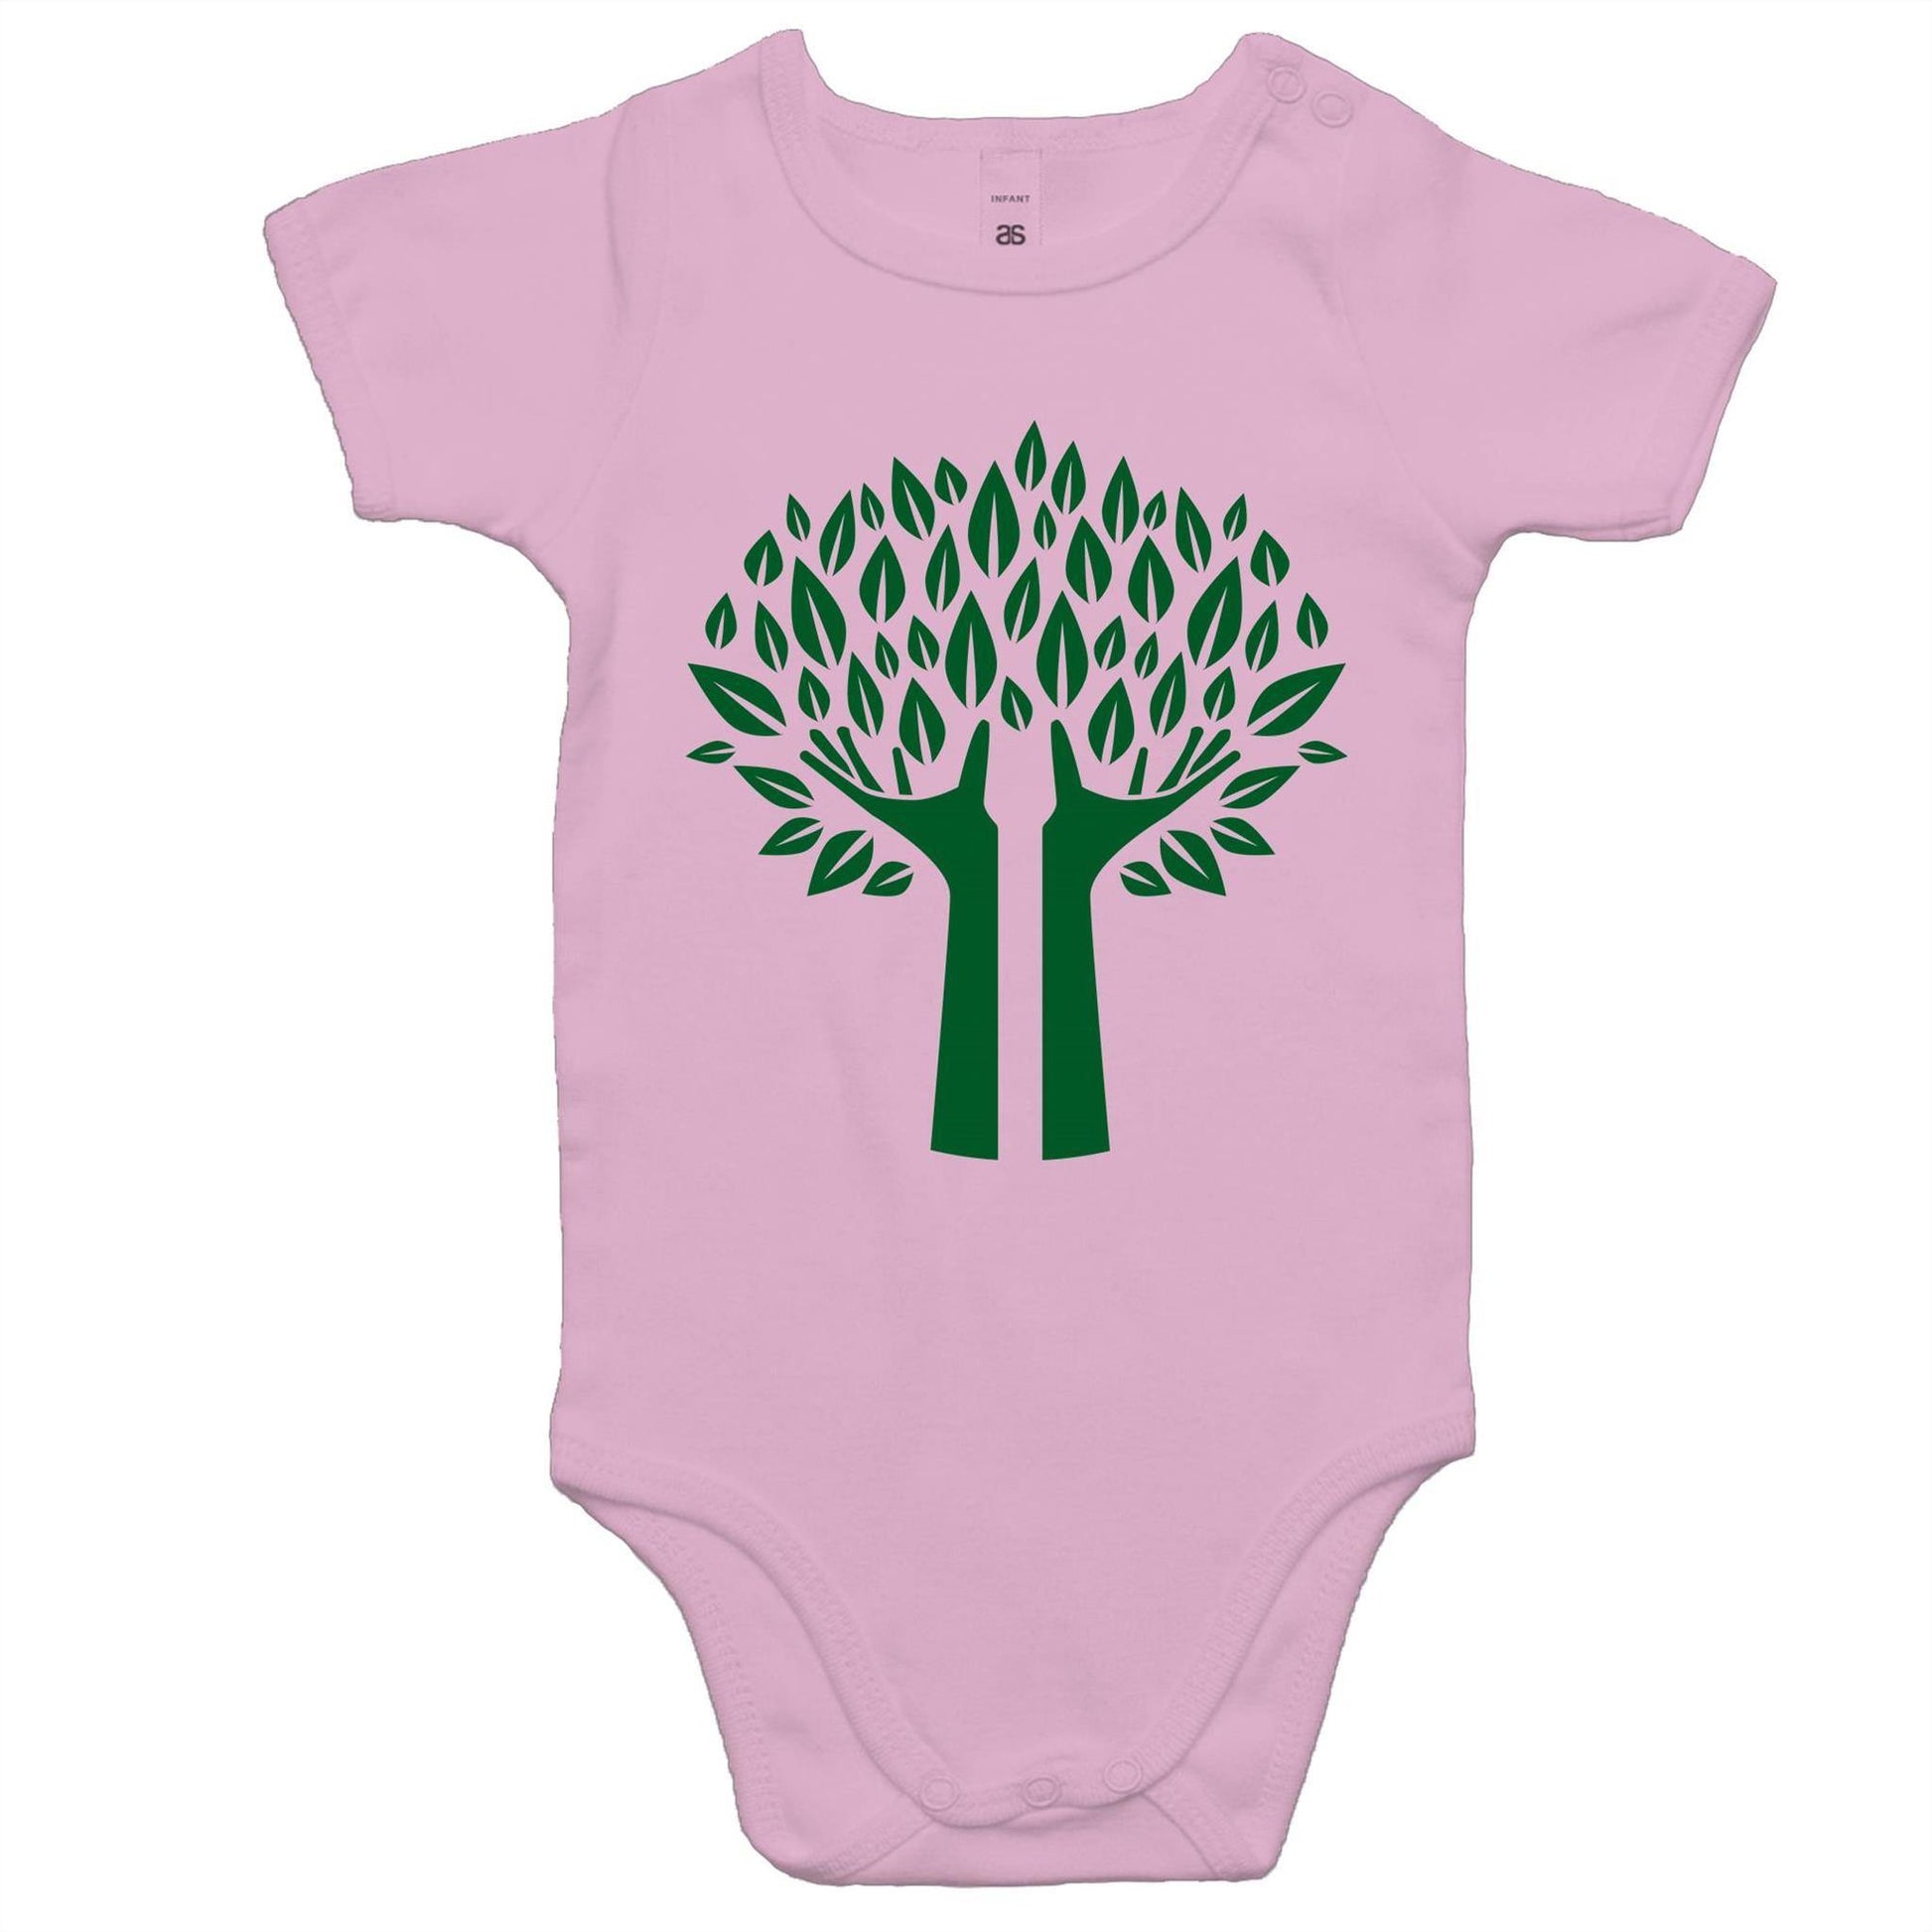 Green Tree - Baby Bodysuit Pink Baby Bodysuit Environment kids Plants